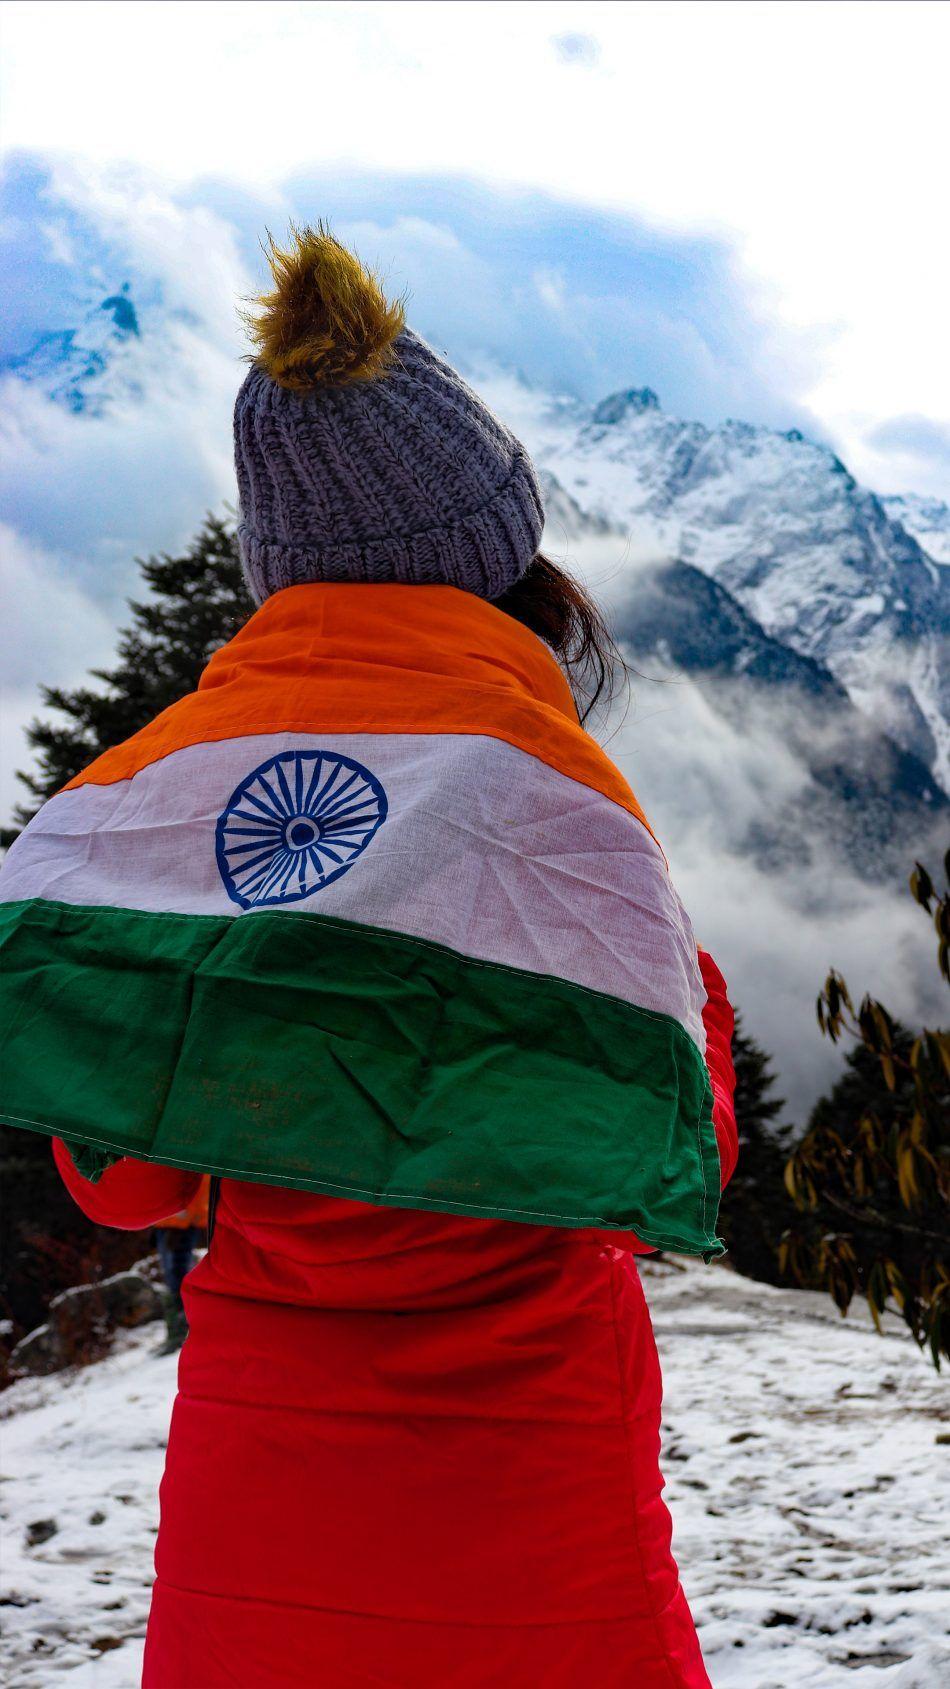 Girl Indian Flag Snow Mountains 4K Ultra HD Mobile Wallpaper. Indian flag photo, Indian flag, Indian flag image